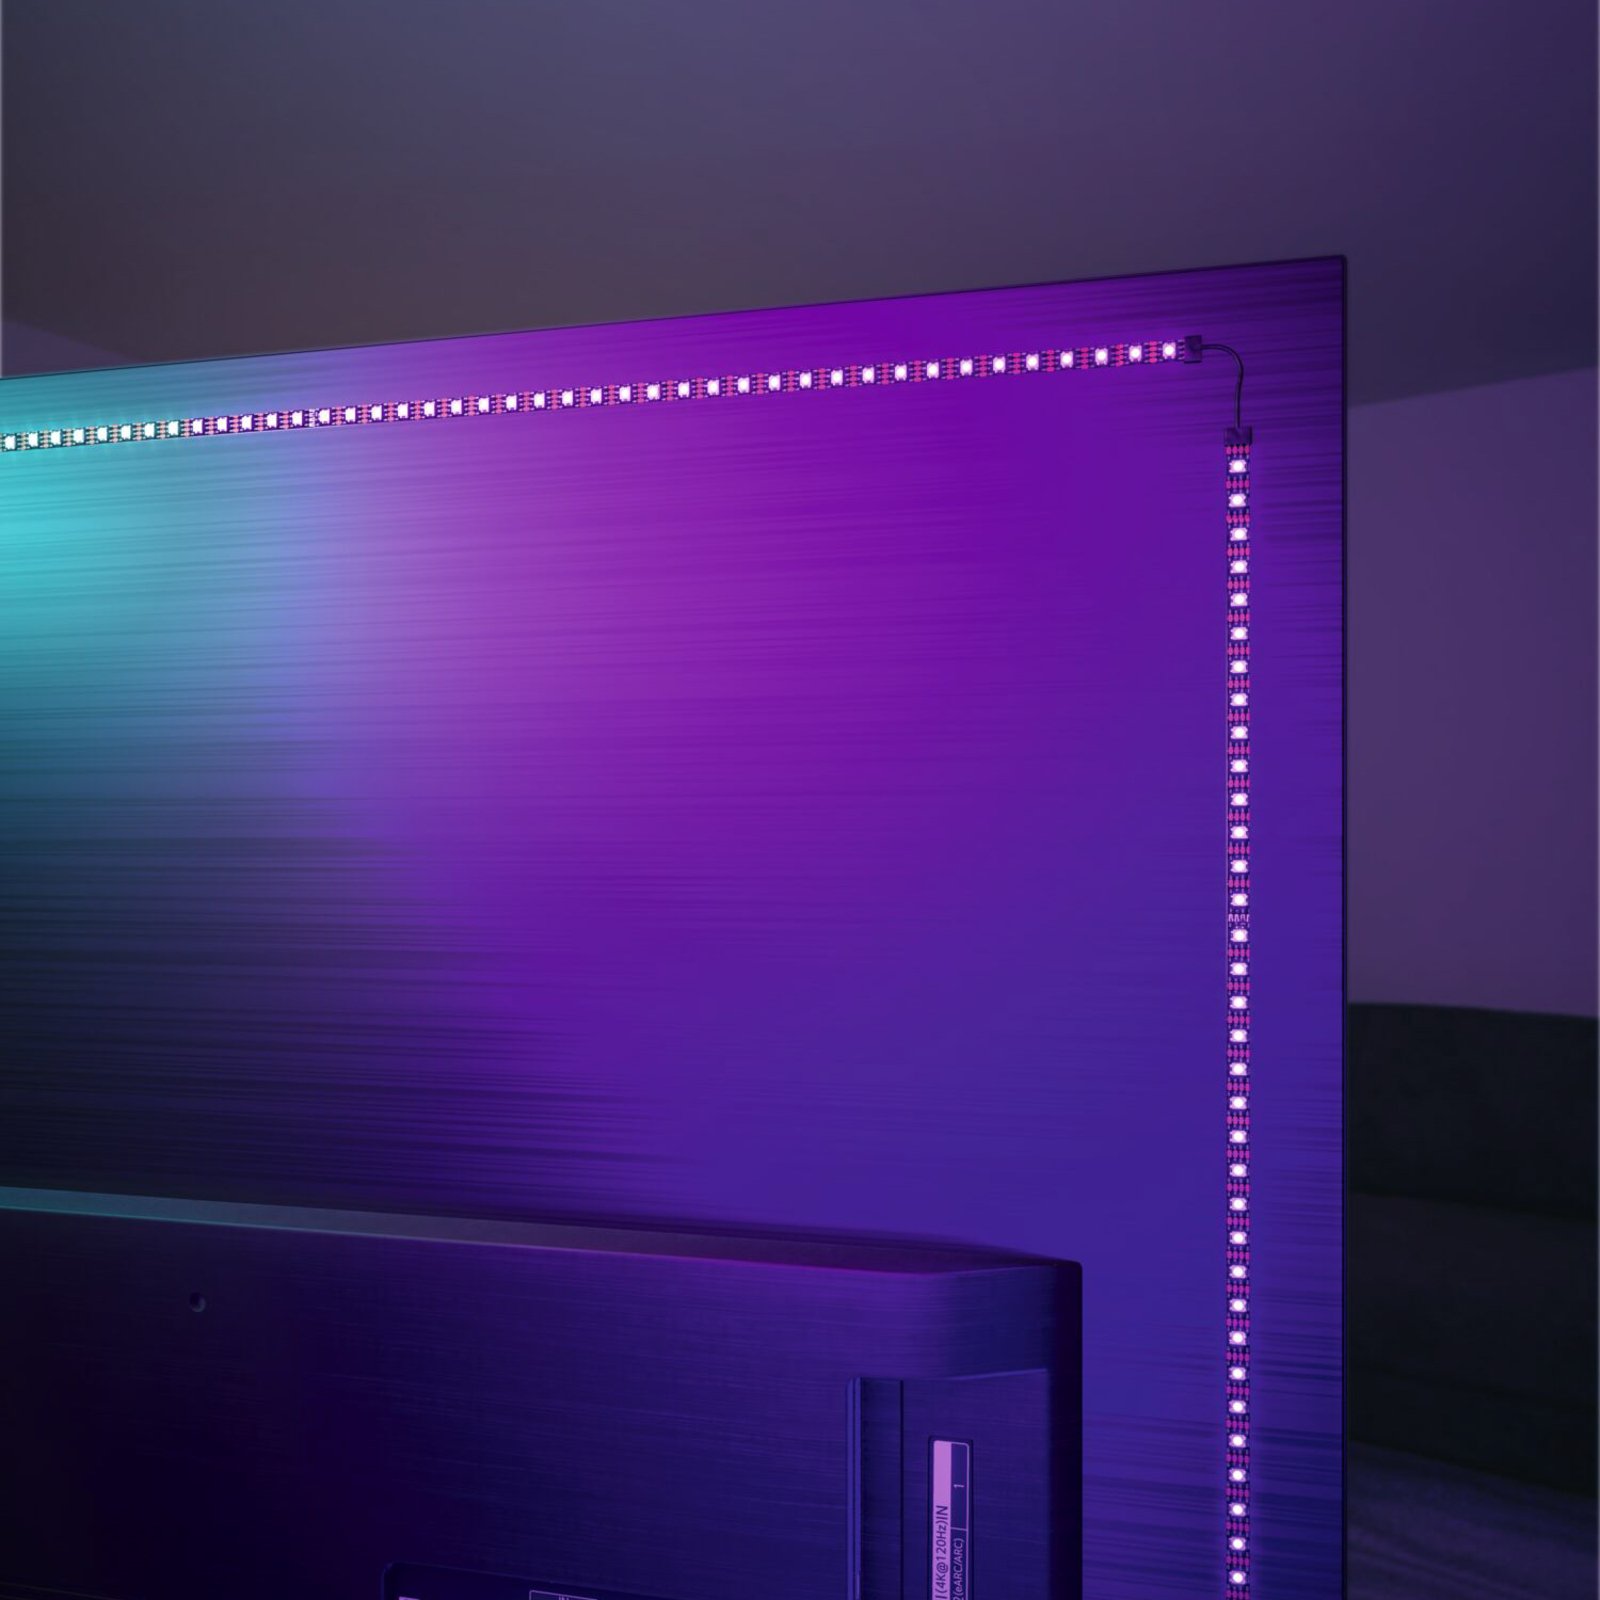 Paulmann EntertainLED LED-Strip RGB televizor 55 palců